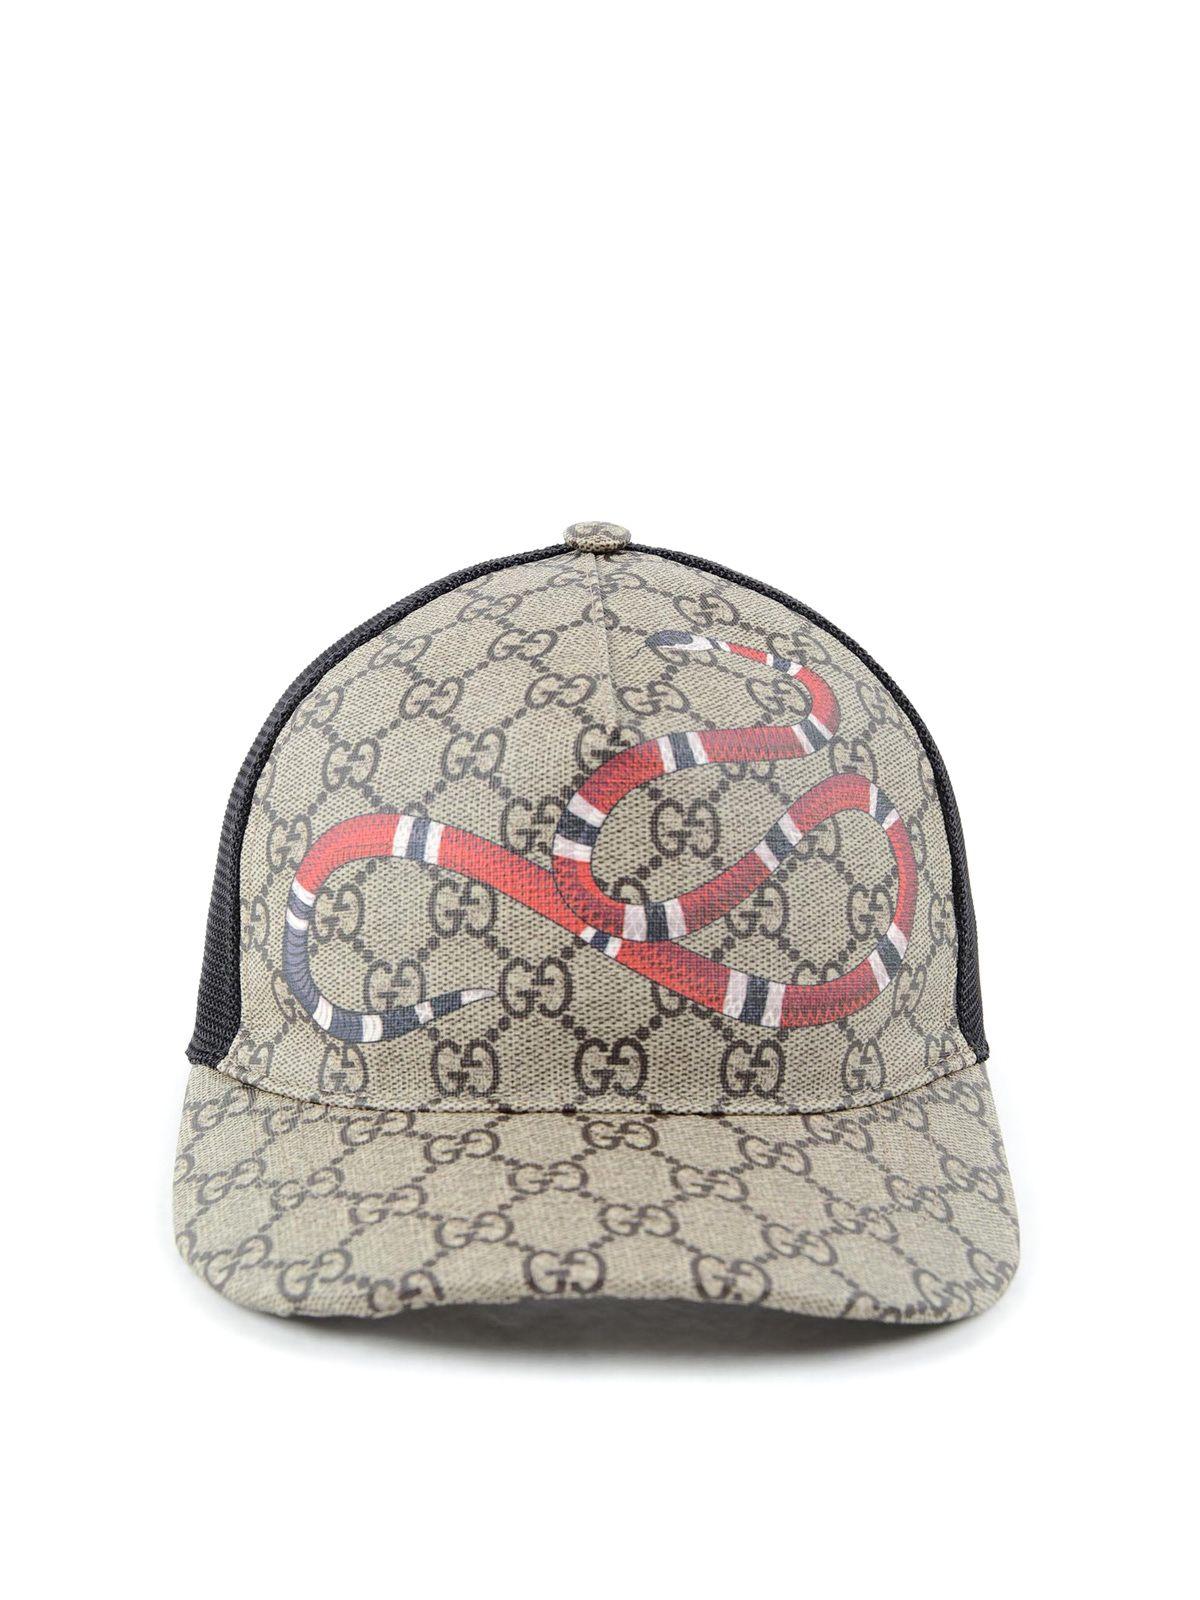 Supreme Gucci Snake Logo - Gucci - Snake GG Supreme baseball hat - hats & caps - 4268874HB10 2160